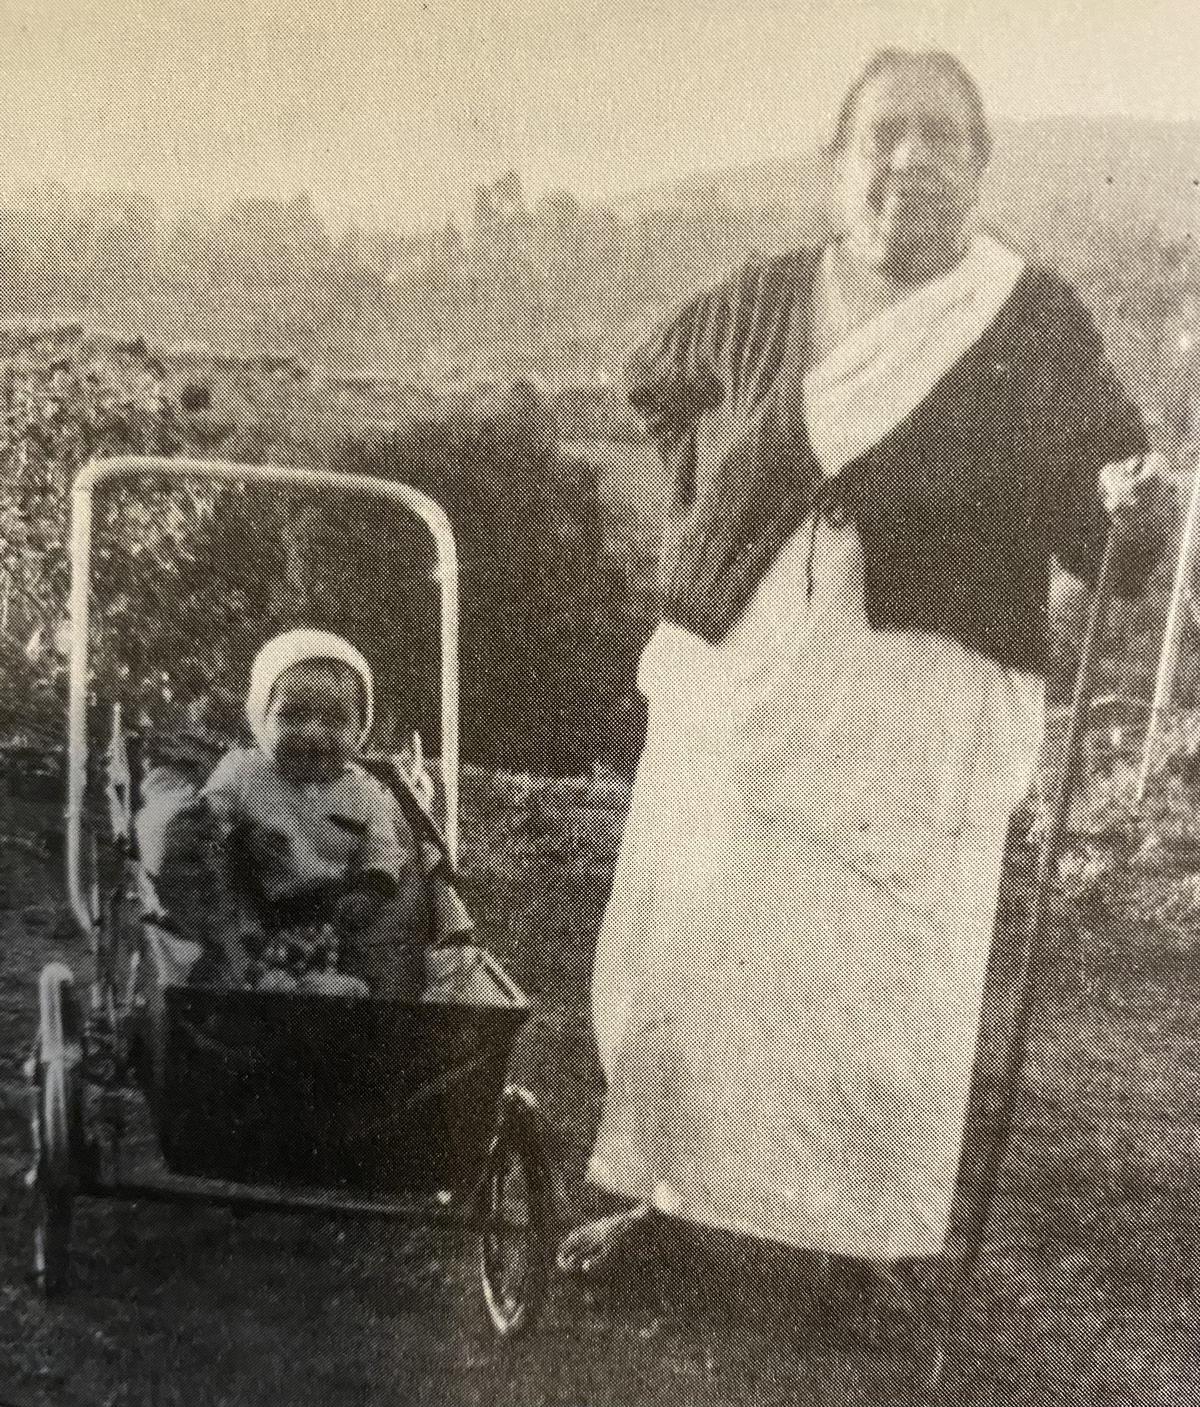 Parukutty Neithayaramma with her great grandson Raghu Palat 